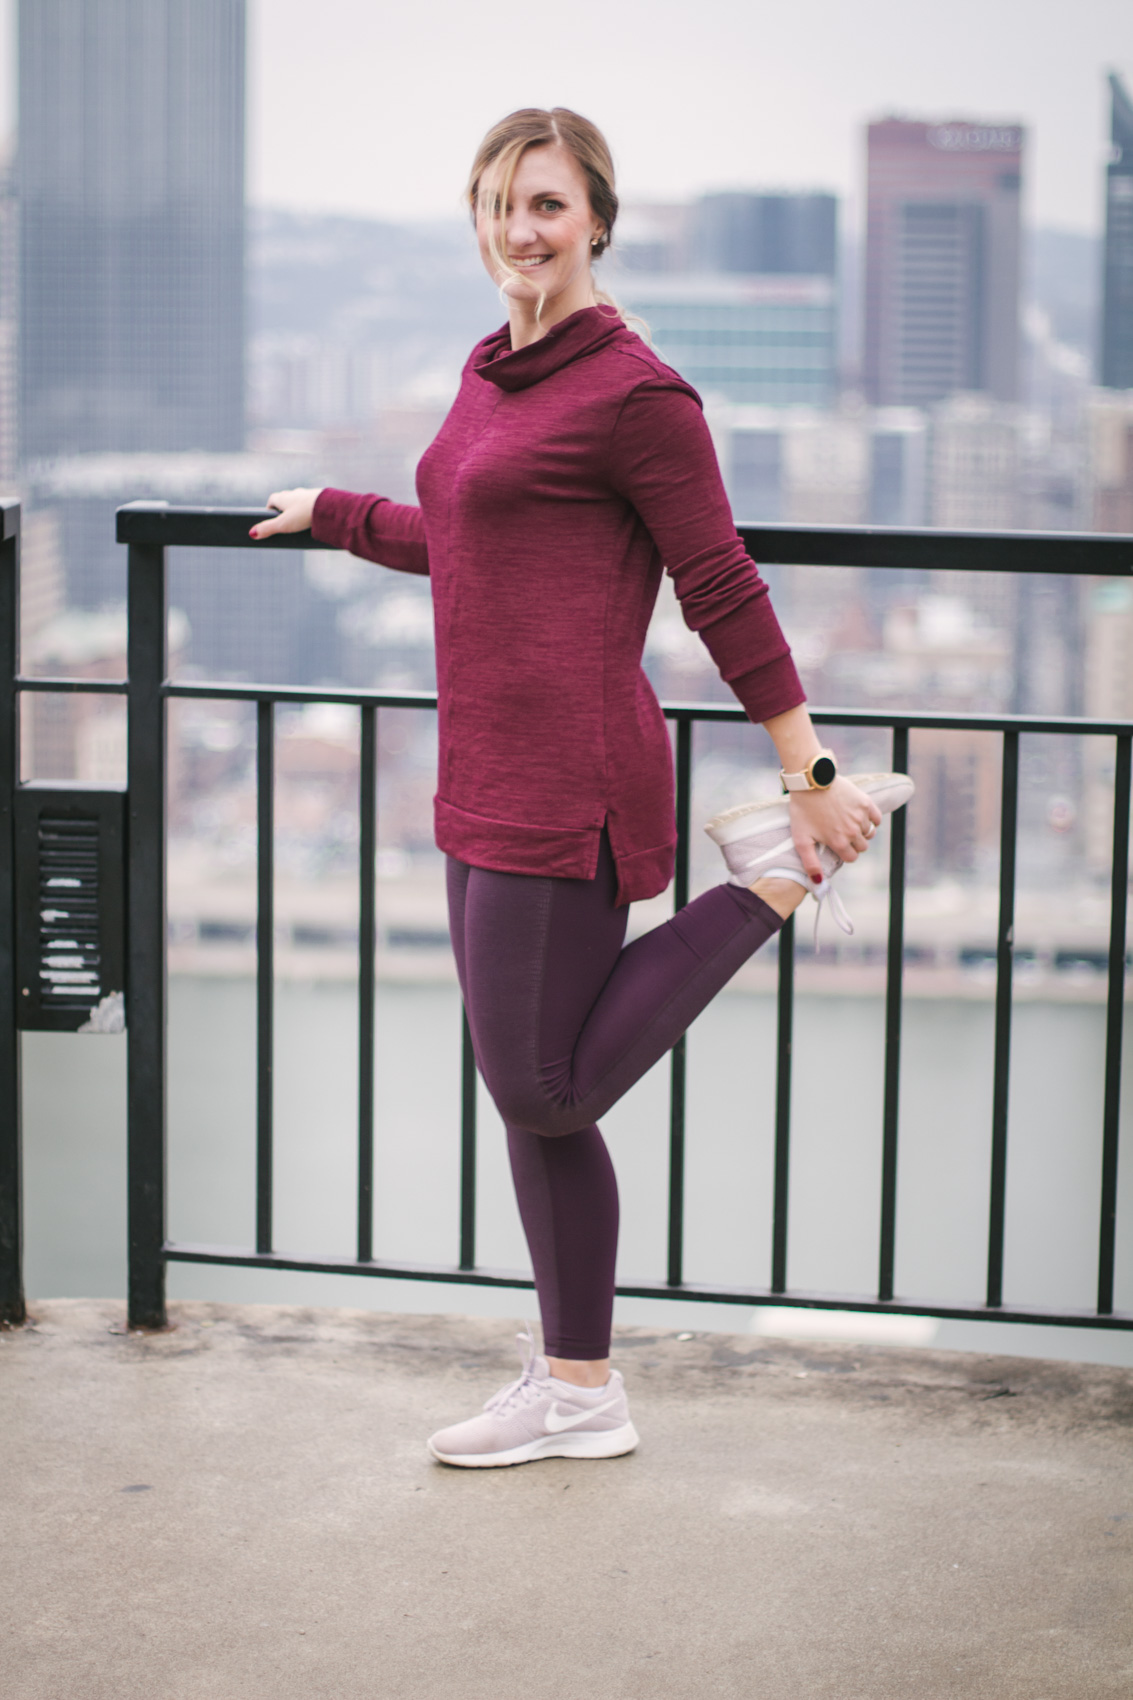 https://allynlewis.com/wp-content/uploads/2019/01/allyn-lewis-winter-workout-planet-fitness-purple-yoga-pants-lr-3.jpg